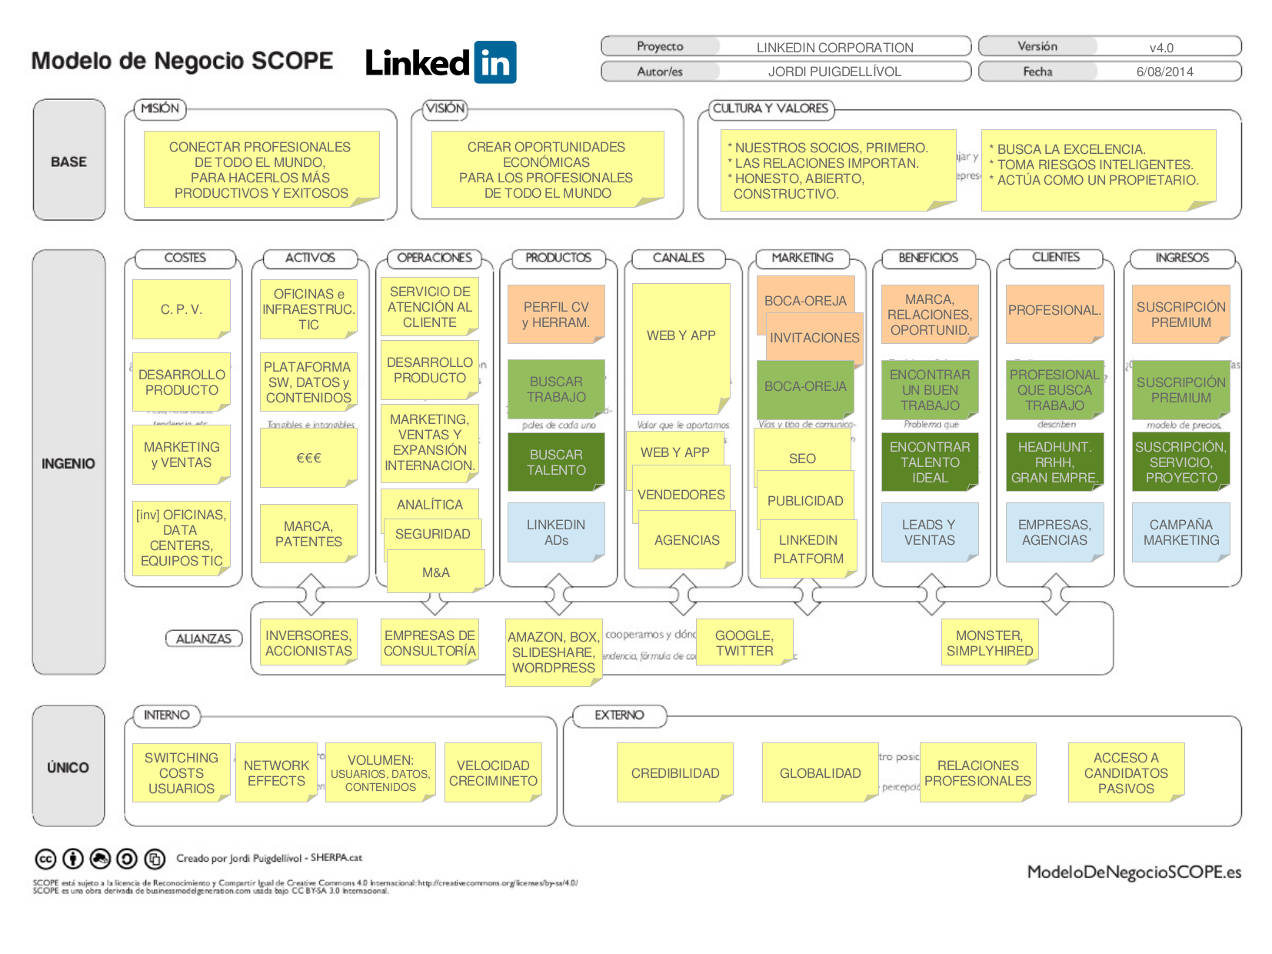 Linkedin - Modelo de Negocio SCOPE